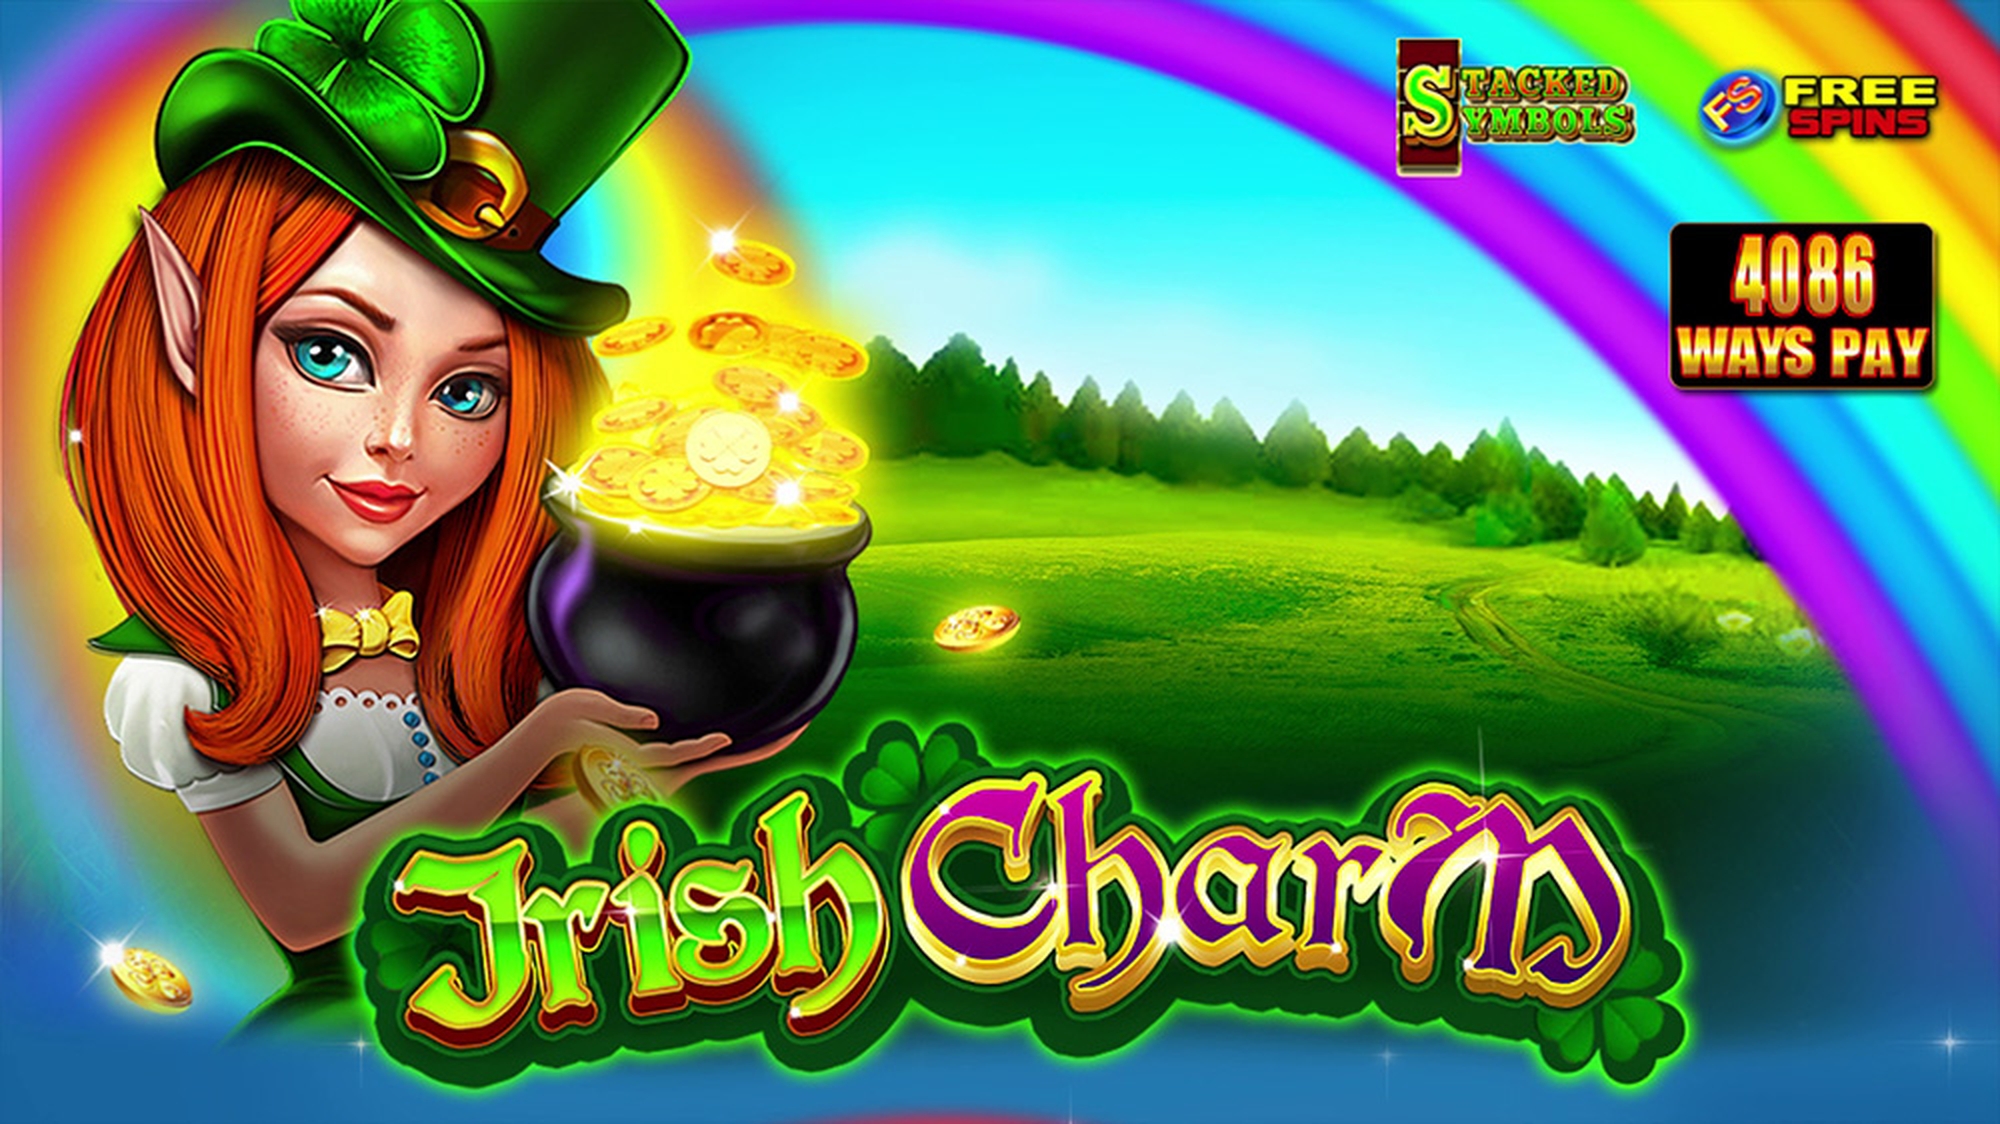 The Irish Charm Online Slot Demo Game by EGT